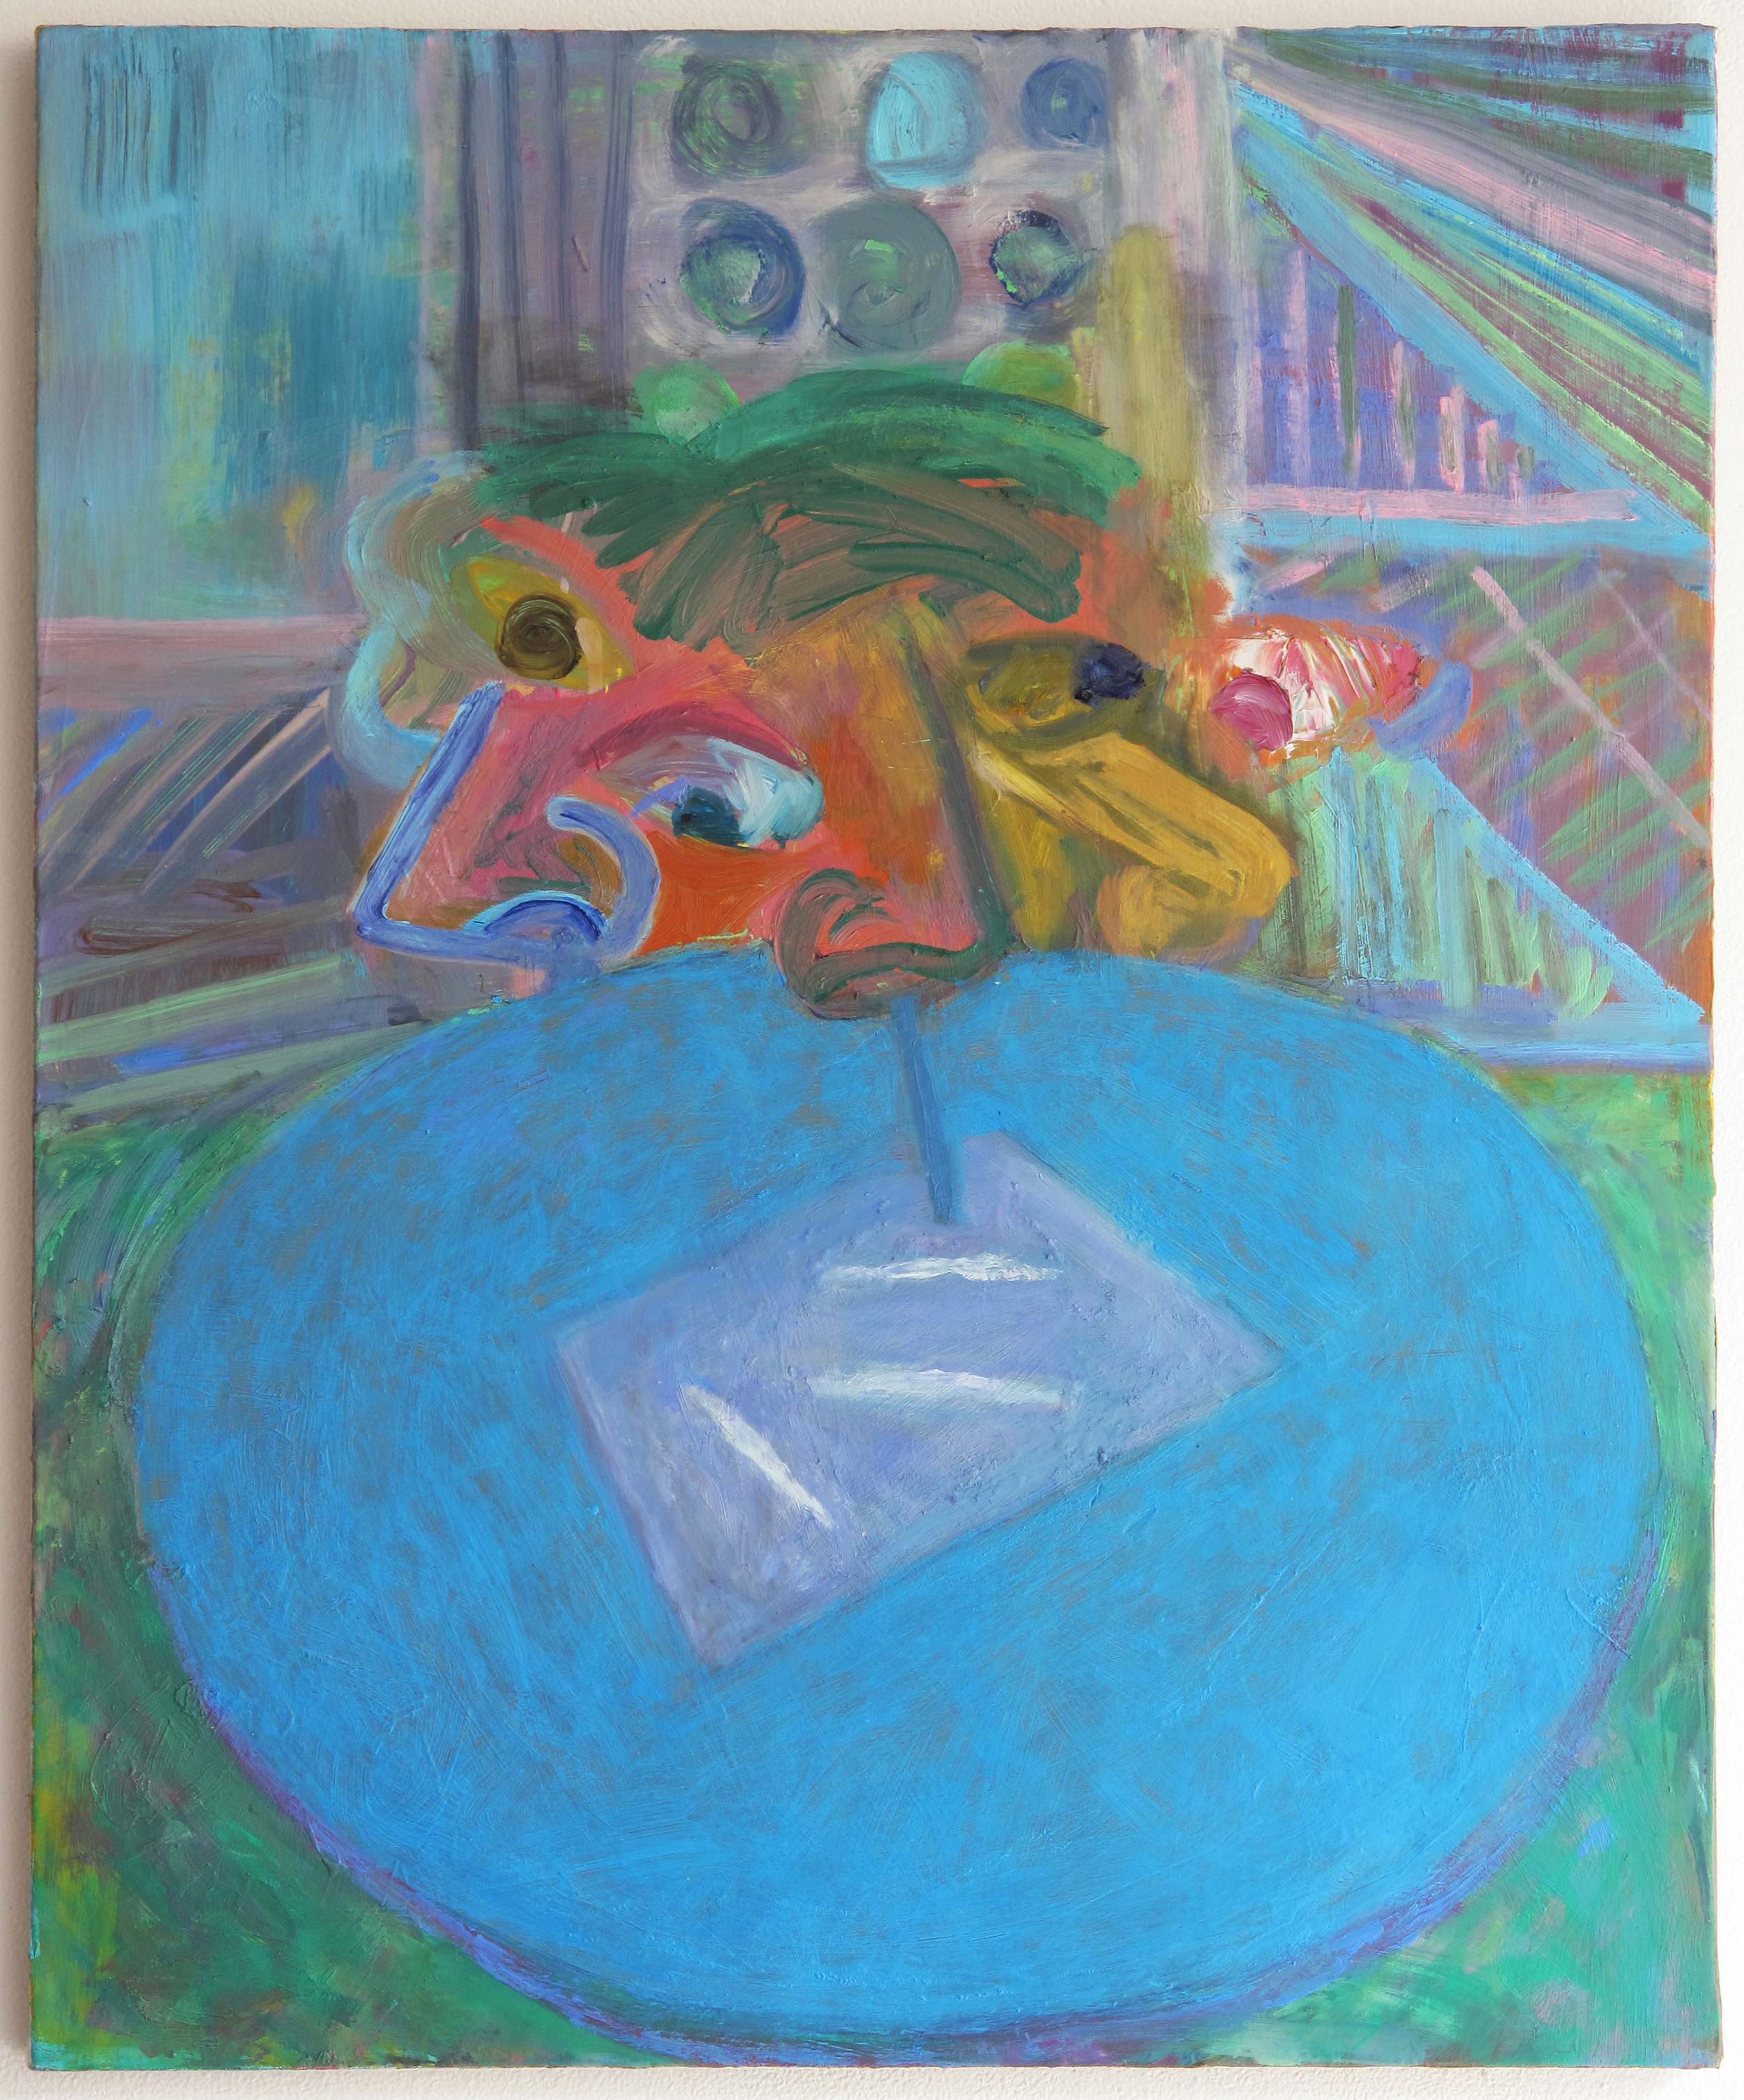  Cubist Coke Head (Blue Table) oil on canvas, 28" x 23" 2009 